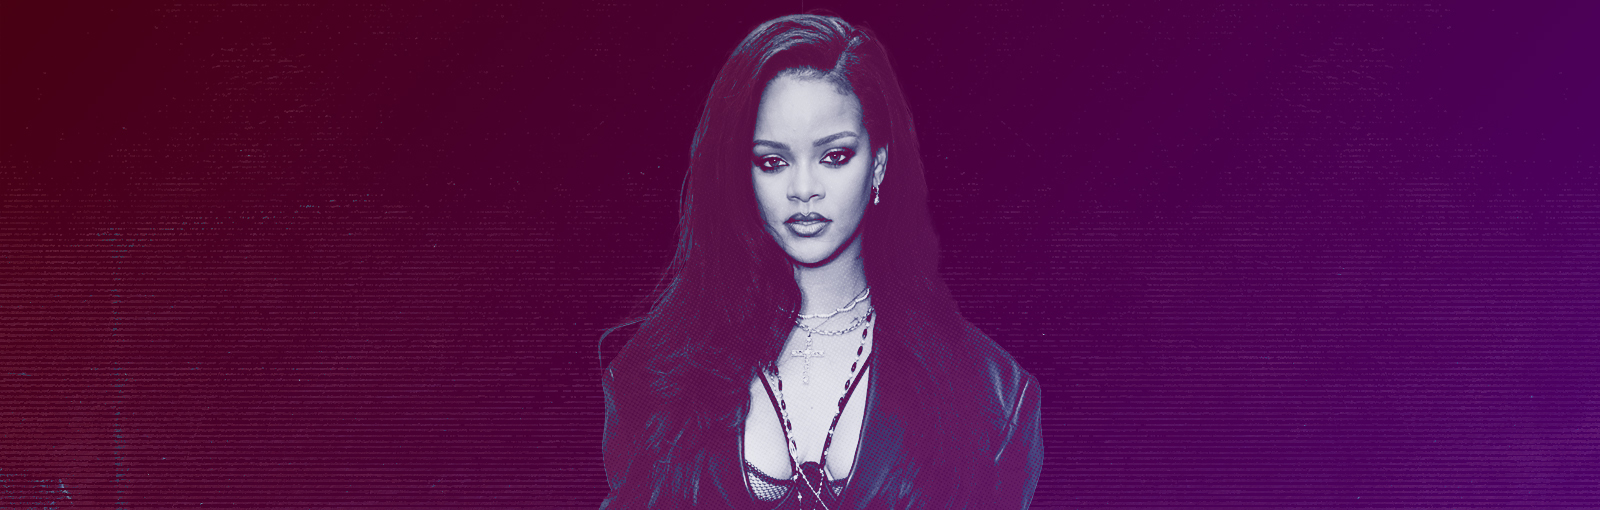 The Best Rihanna Songs Ranked - carmella theme song roblox